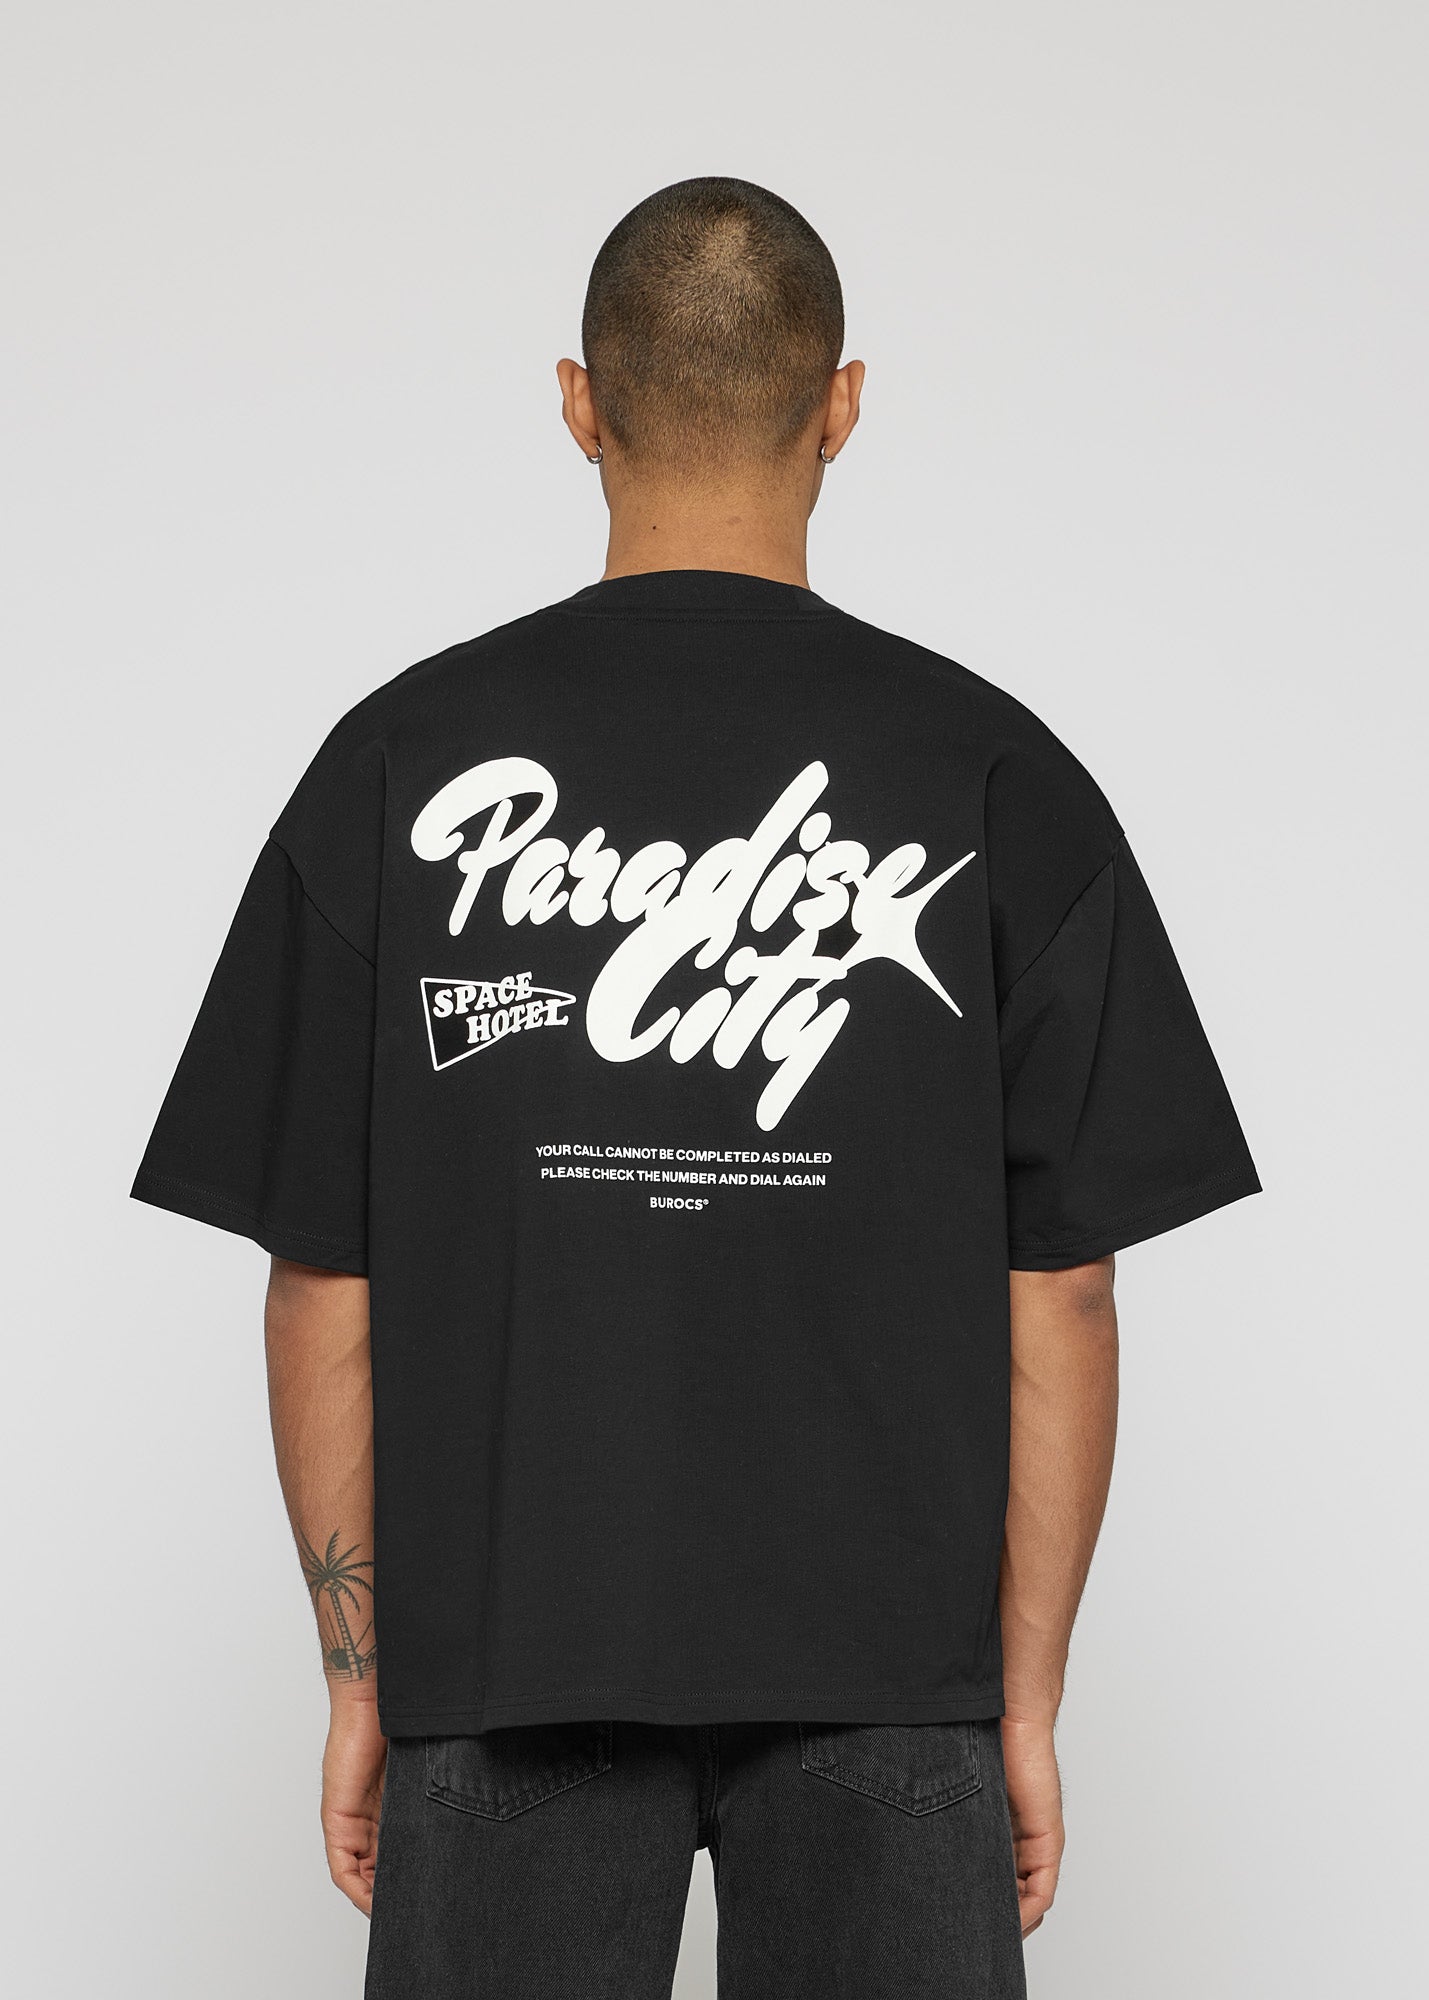 Paradise City T-Shirt